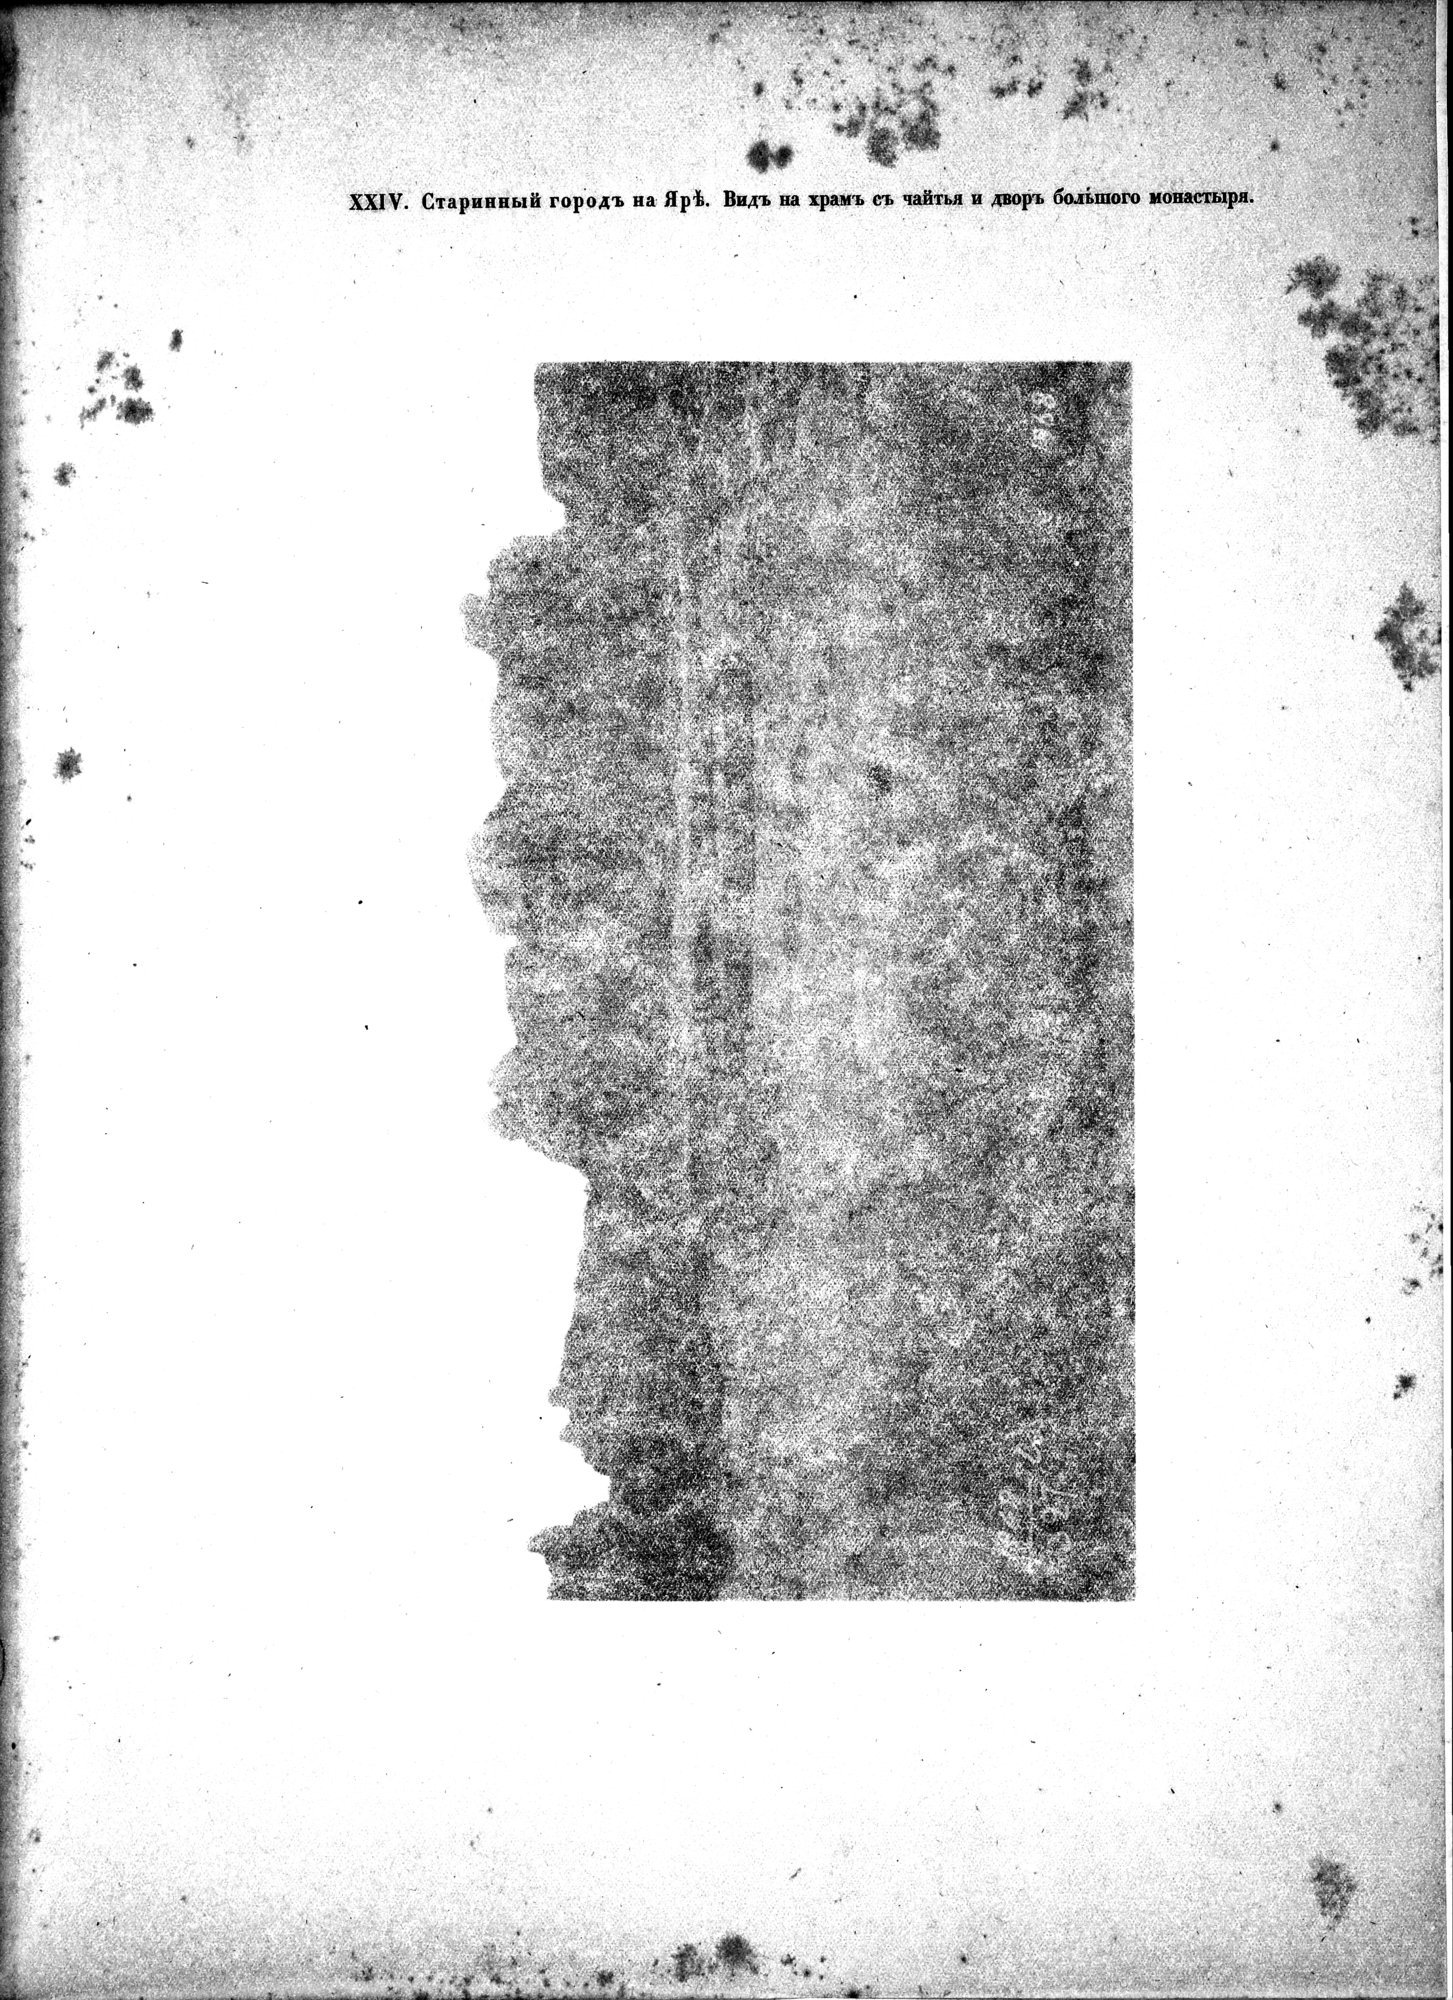 Russkaia Turkestanskaia Ekspeditsiia, 1909-1910 goda : vol.1 / Page 195 (Grayscale High Resolution Image)